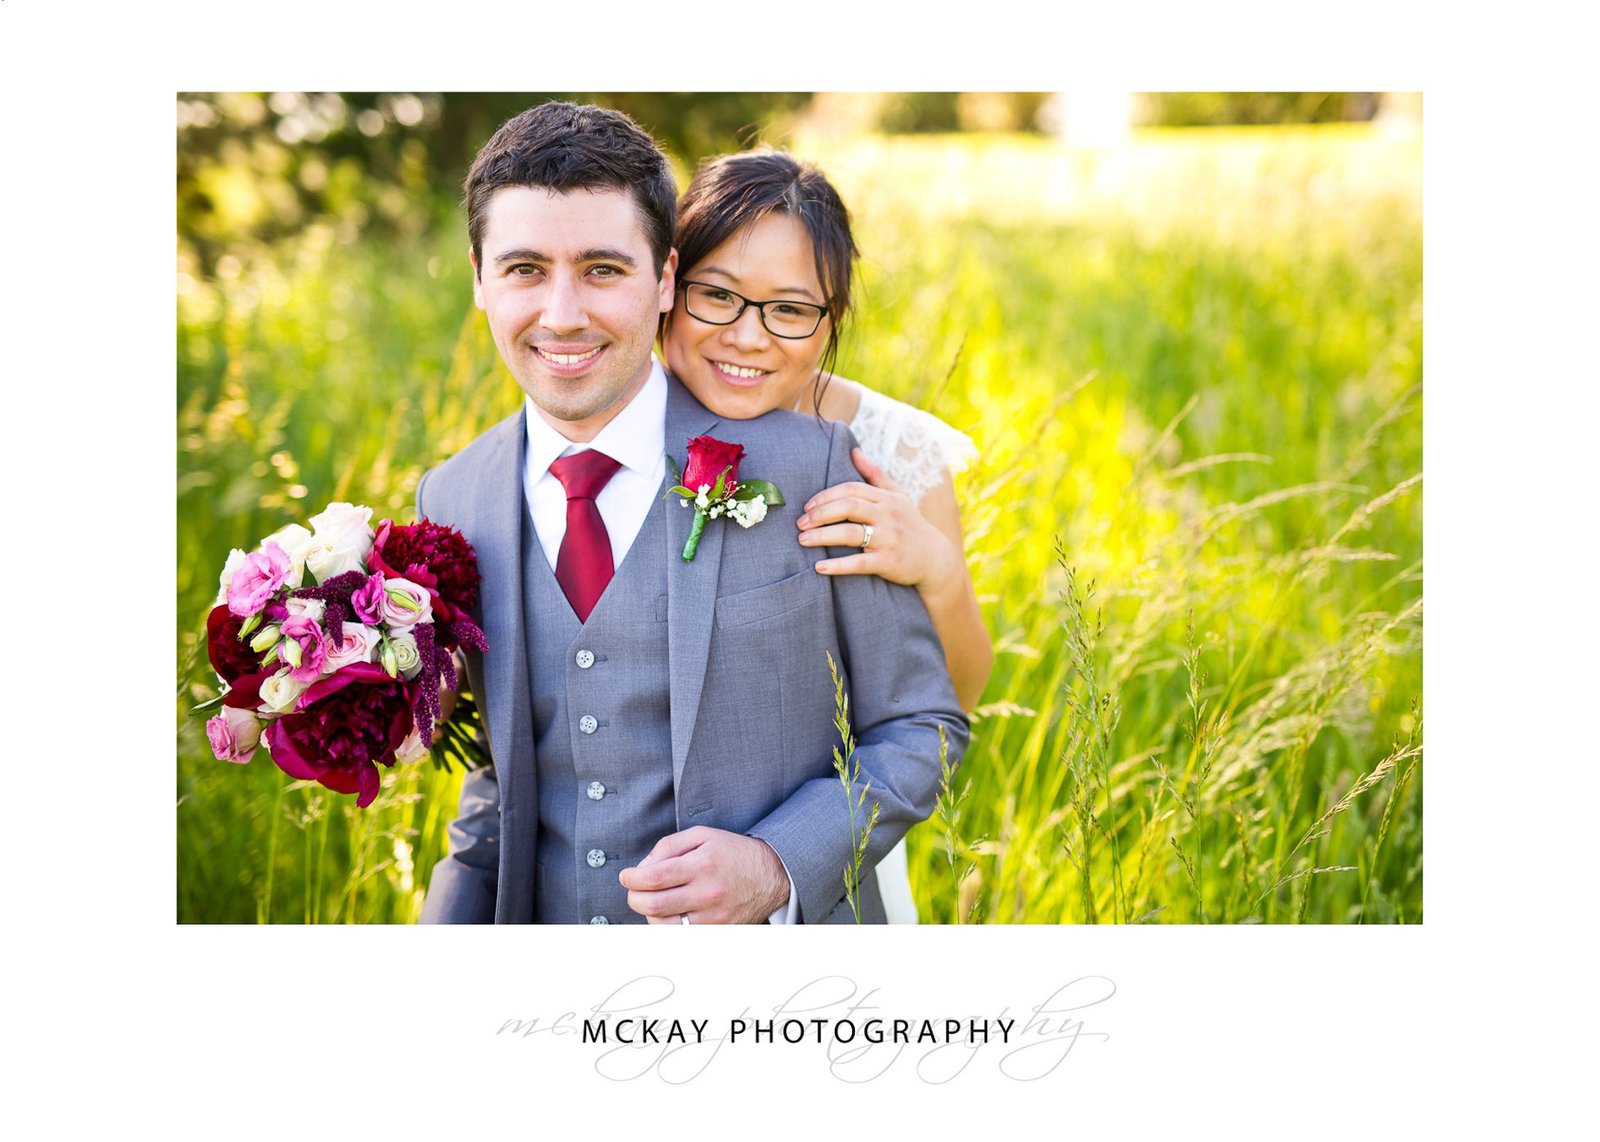 Wedding colour at Briars photos in grass field